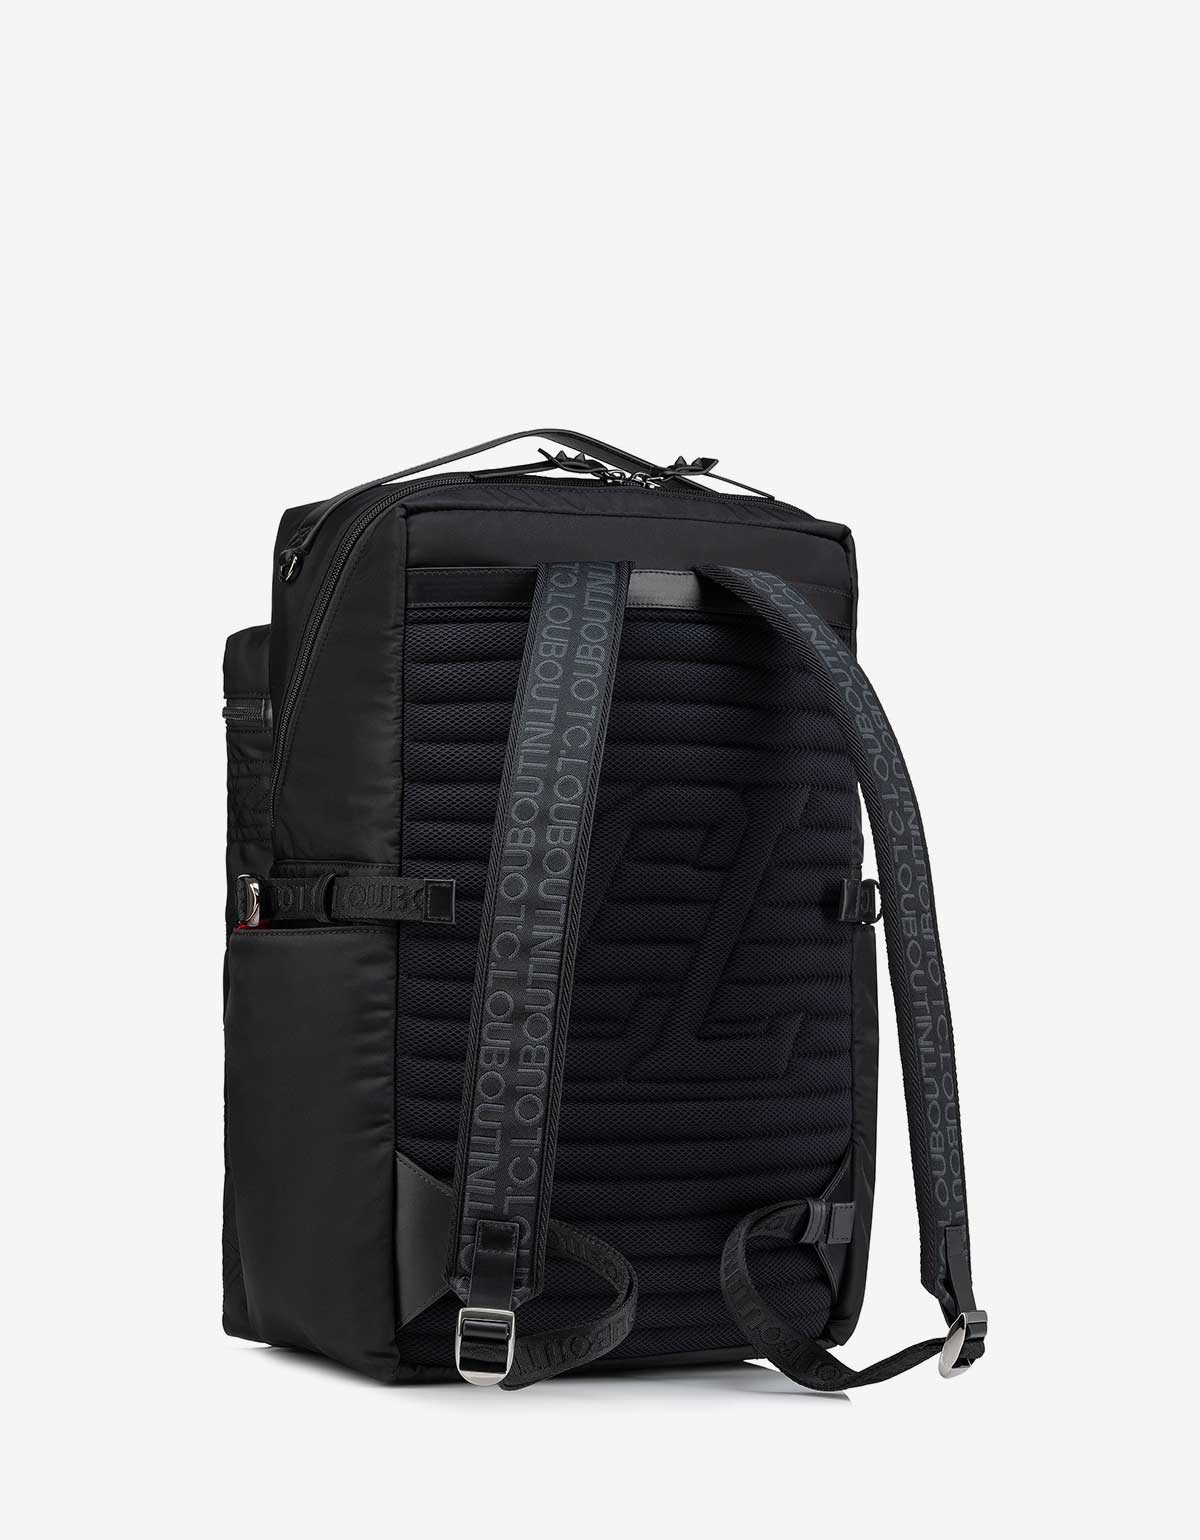 Christian Louboutin - Loubideal Black Sneaker Sole Backpack -